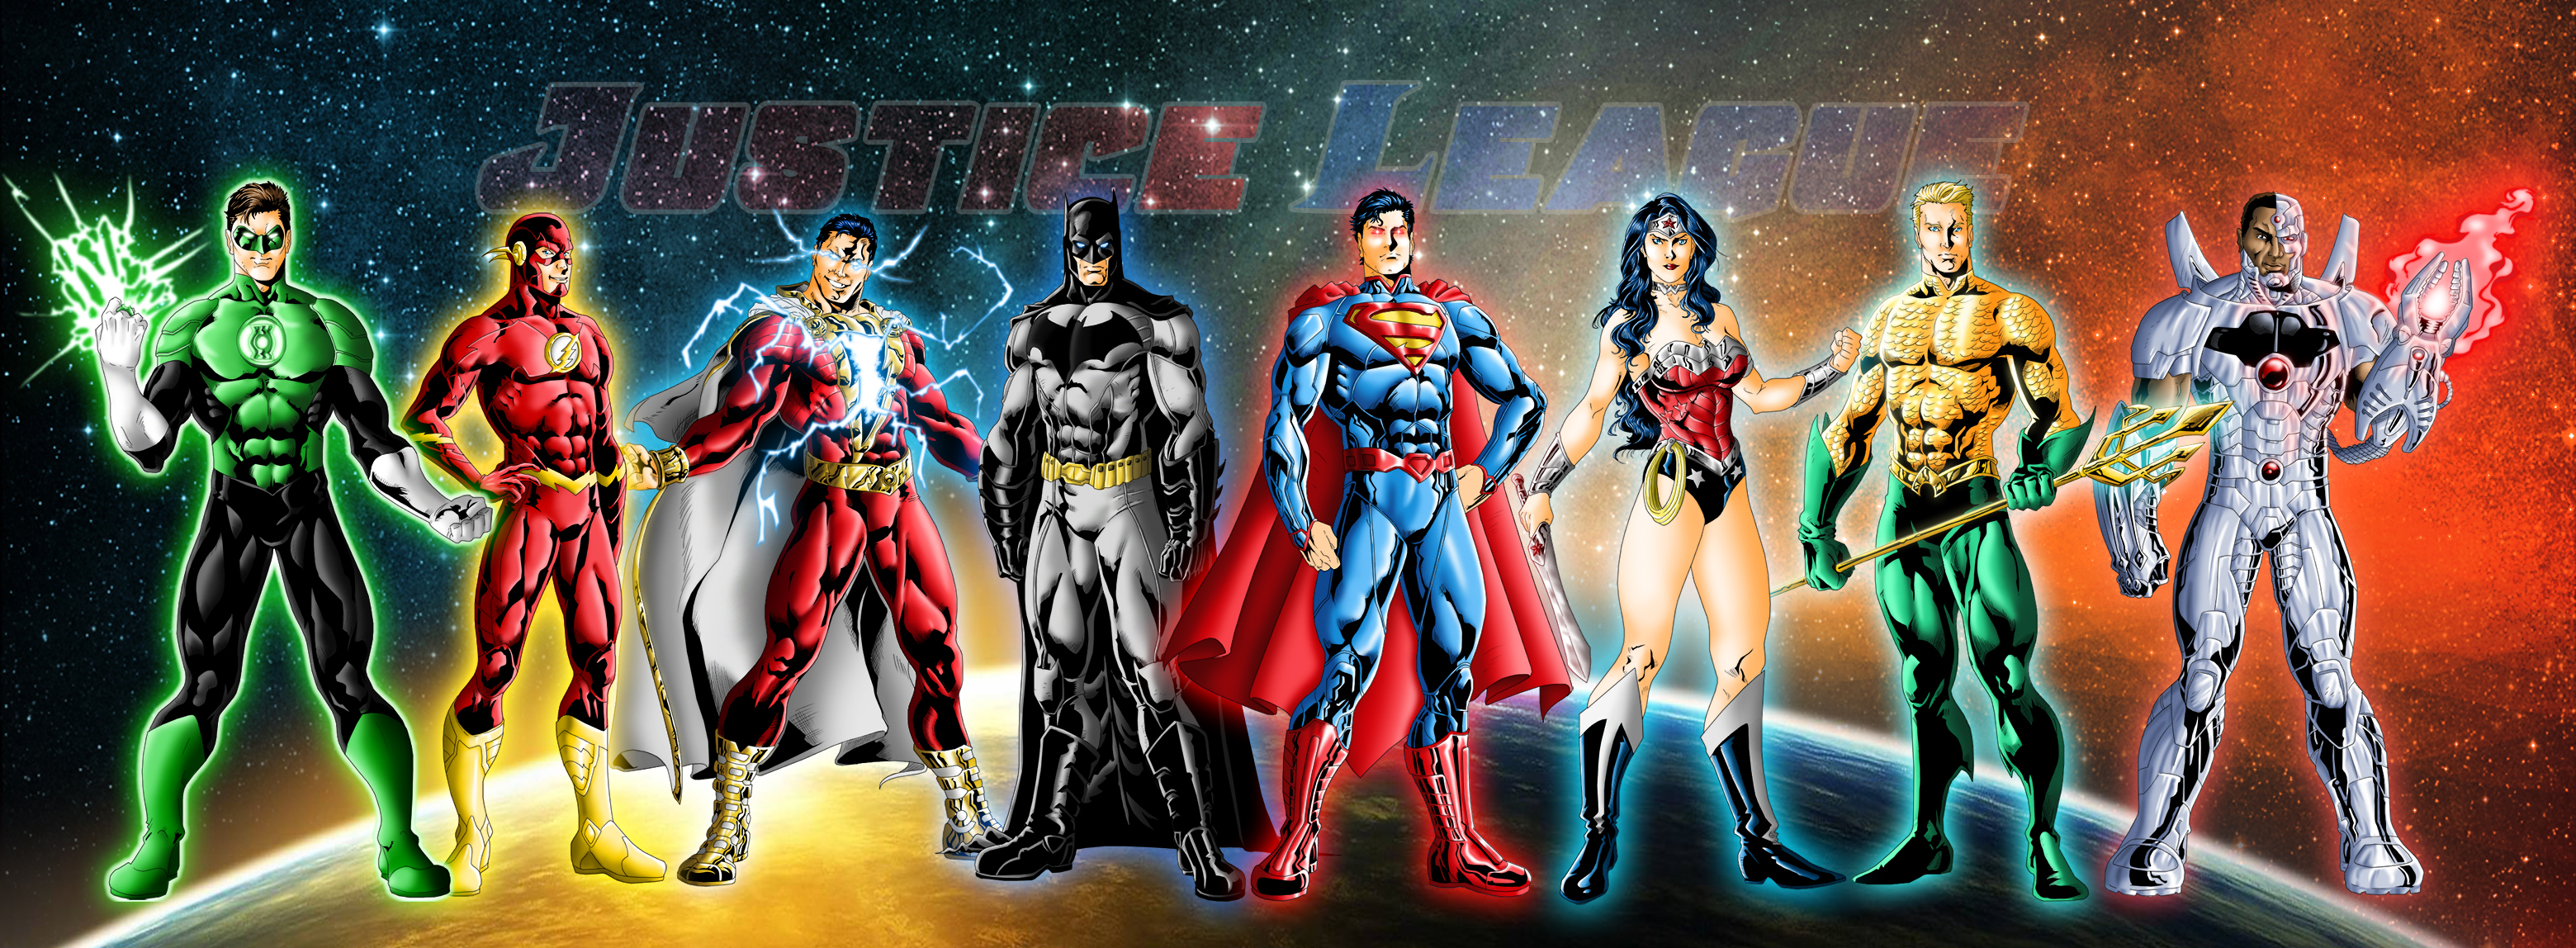 comics, justice league, aquaman, barry allen, batman, billy batson, cyborg (dc comics), dc comics, diana prince, flash, green lantern, hal jordan, shazam (dc comics), superhero, superman, wonder woman